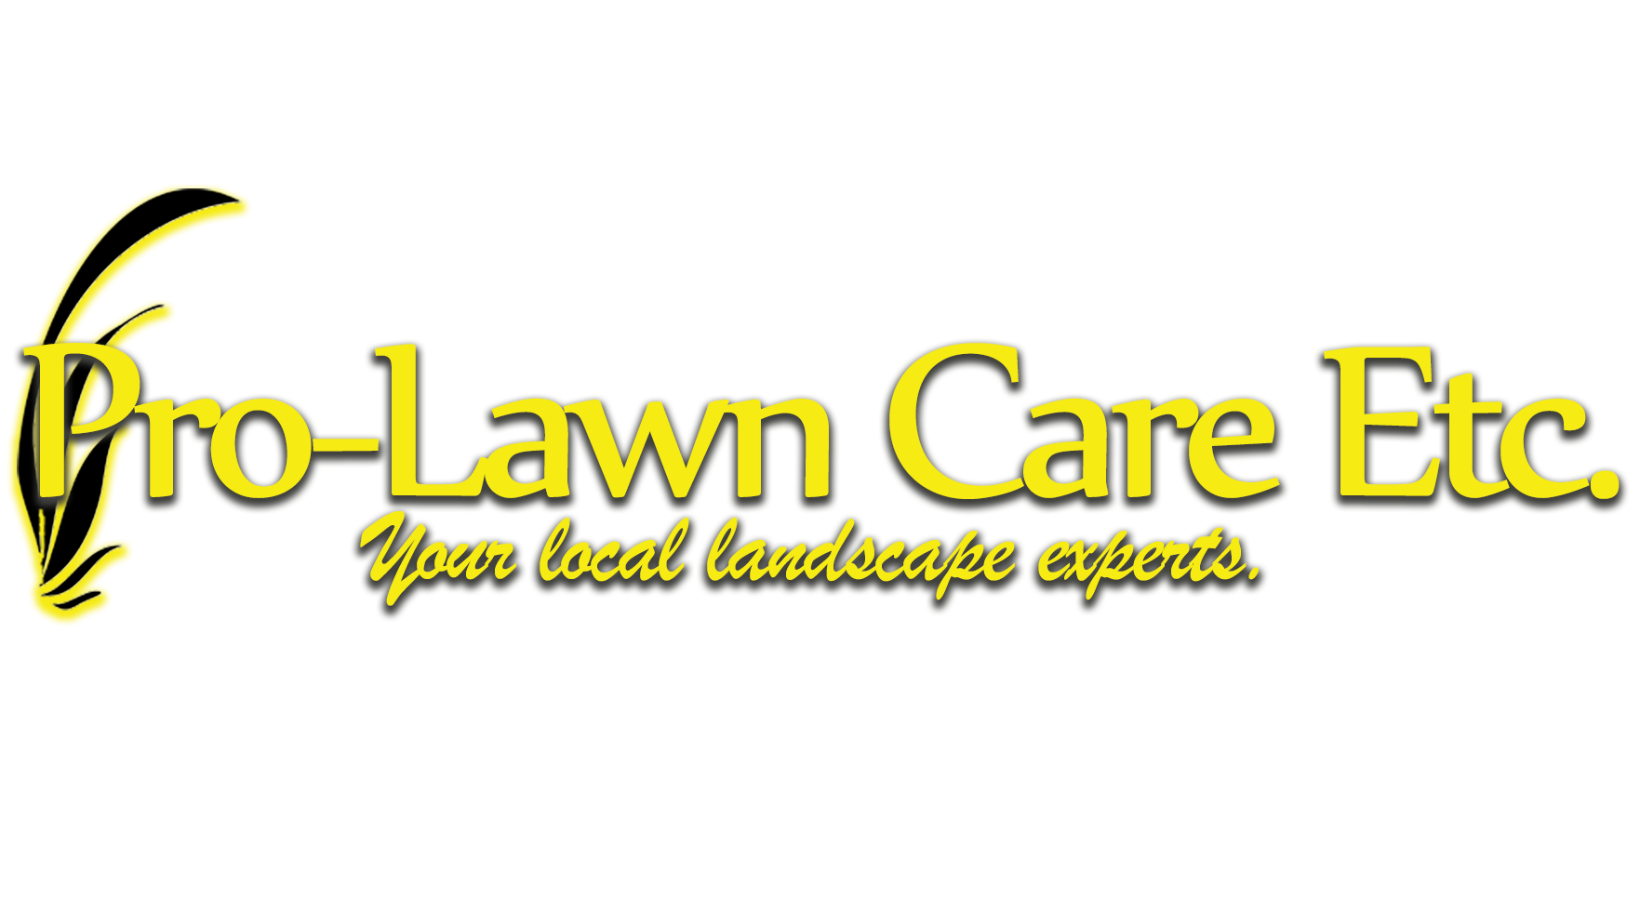 Pro Lawn Care Etc., Inc. Logo